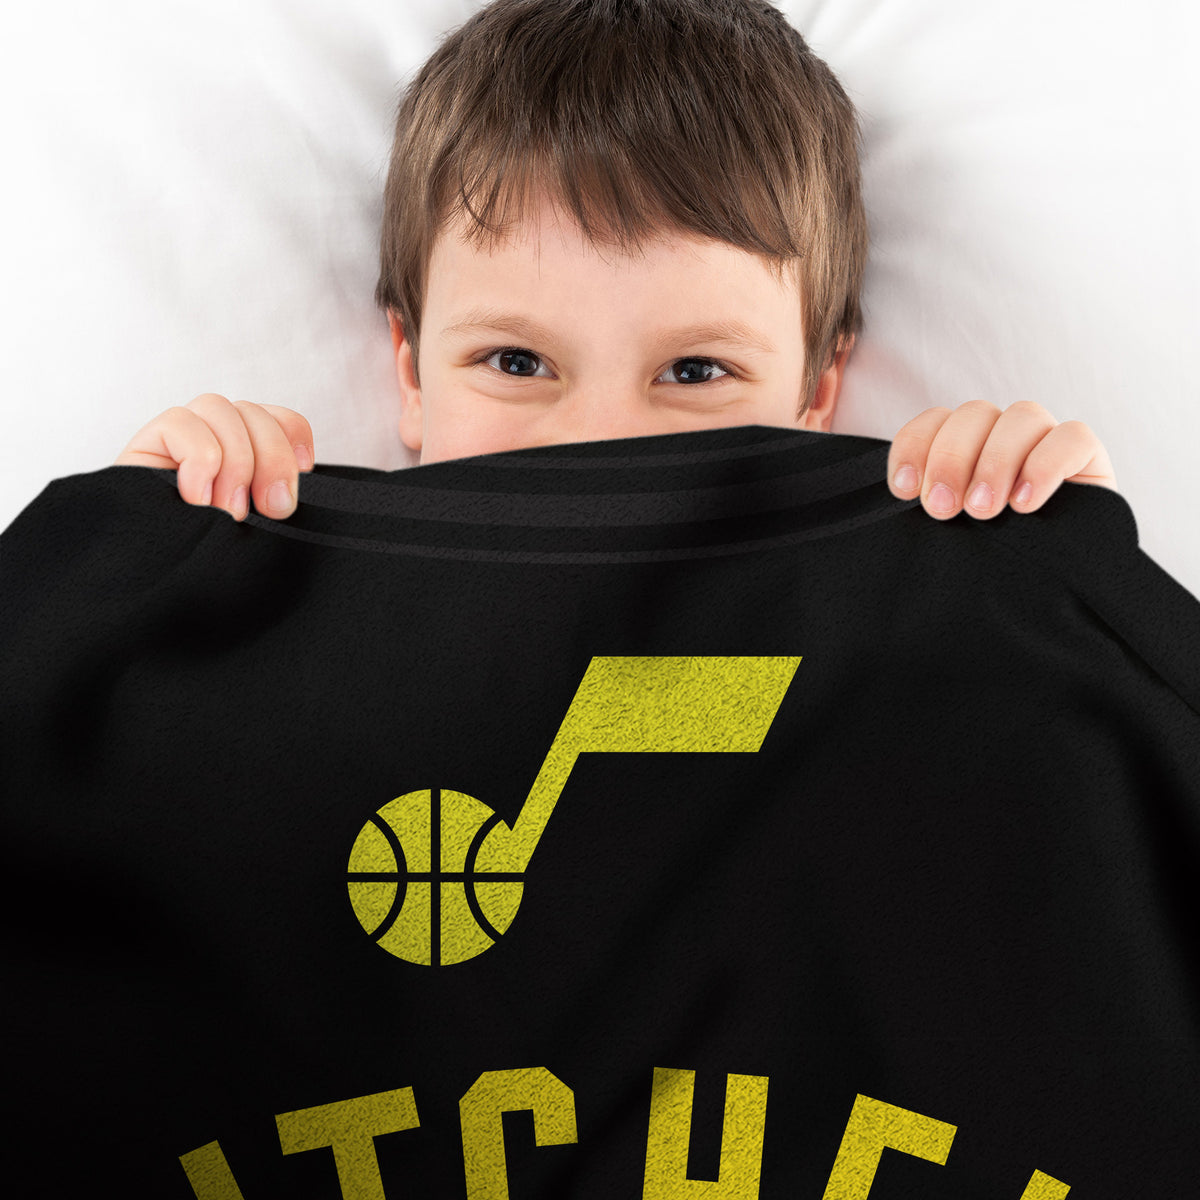 Utah Jazz Donovan Mitchell 60” x 80” Plush Jersey Blanket